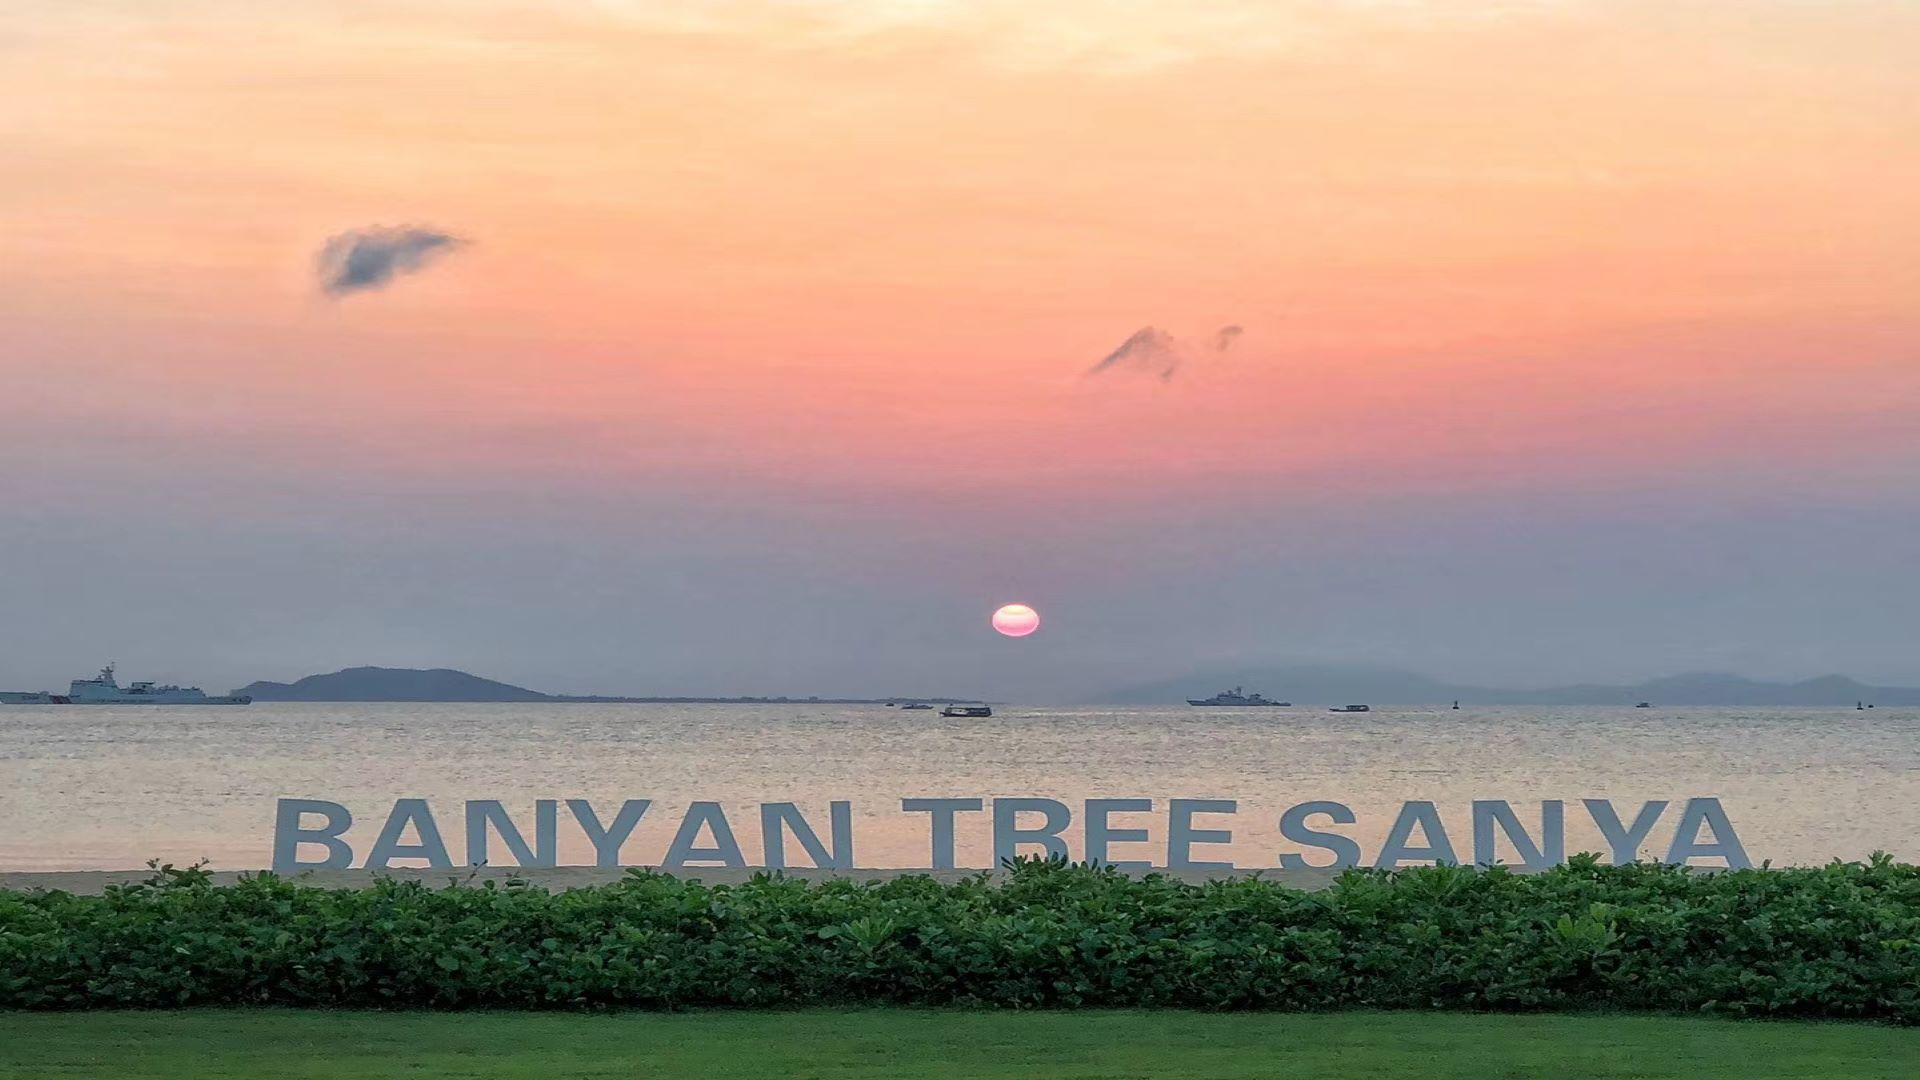 Banyan Tree China Sanya Gallery - Sunset